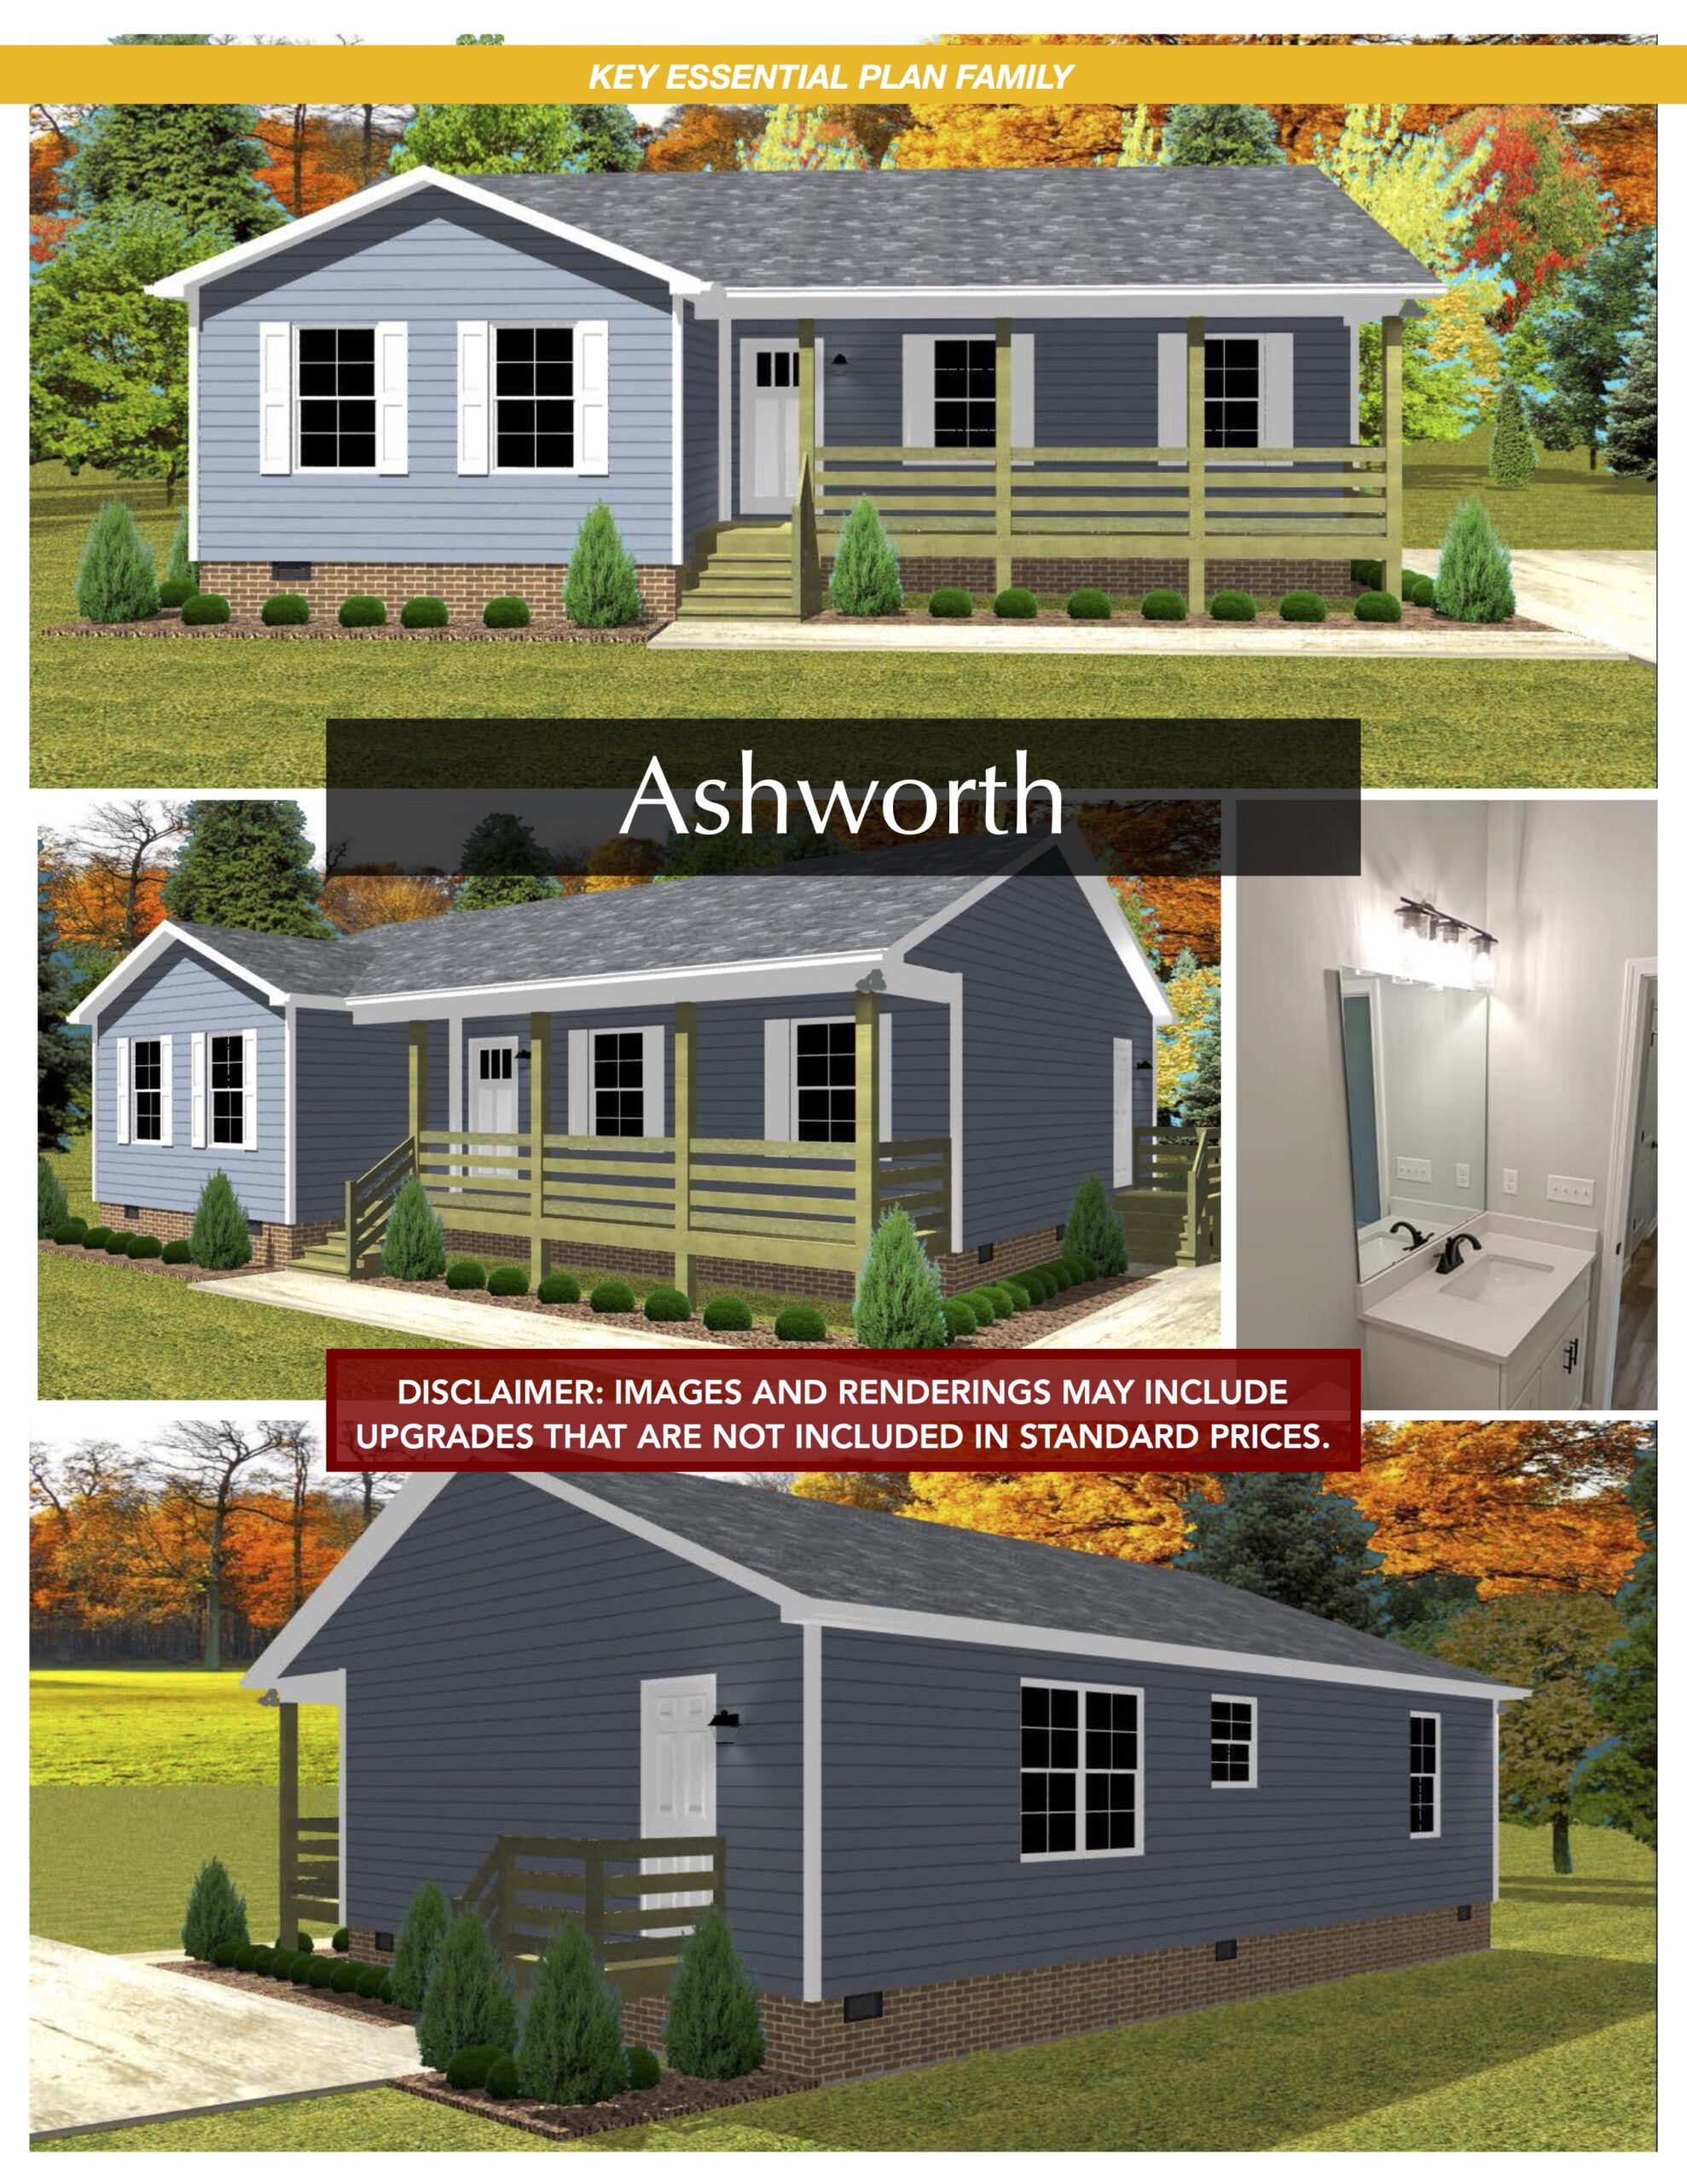 The Ashworth floor plan